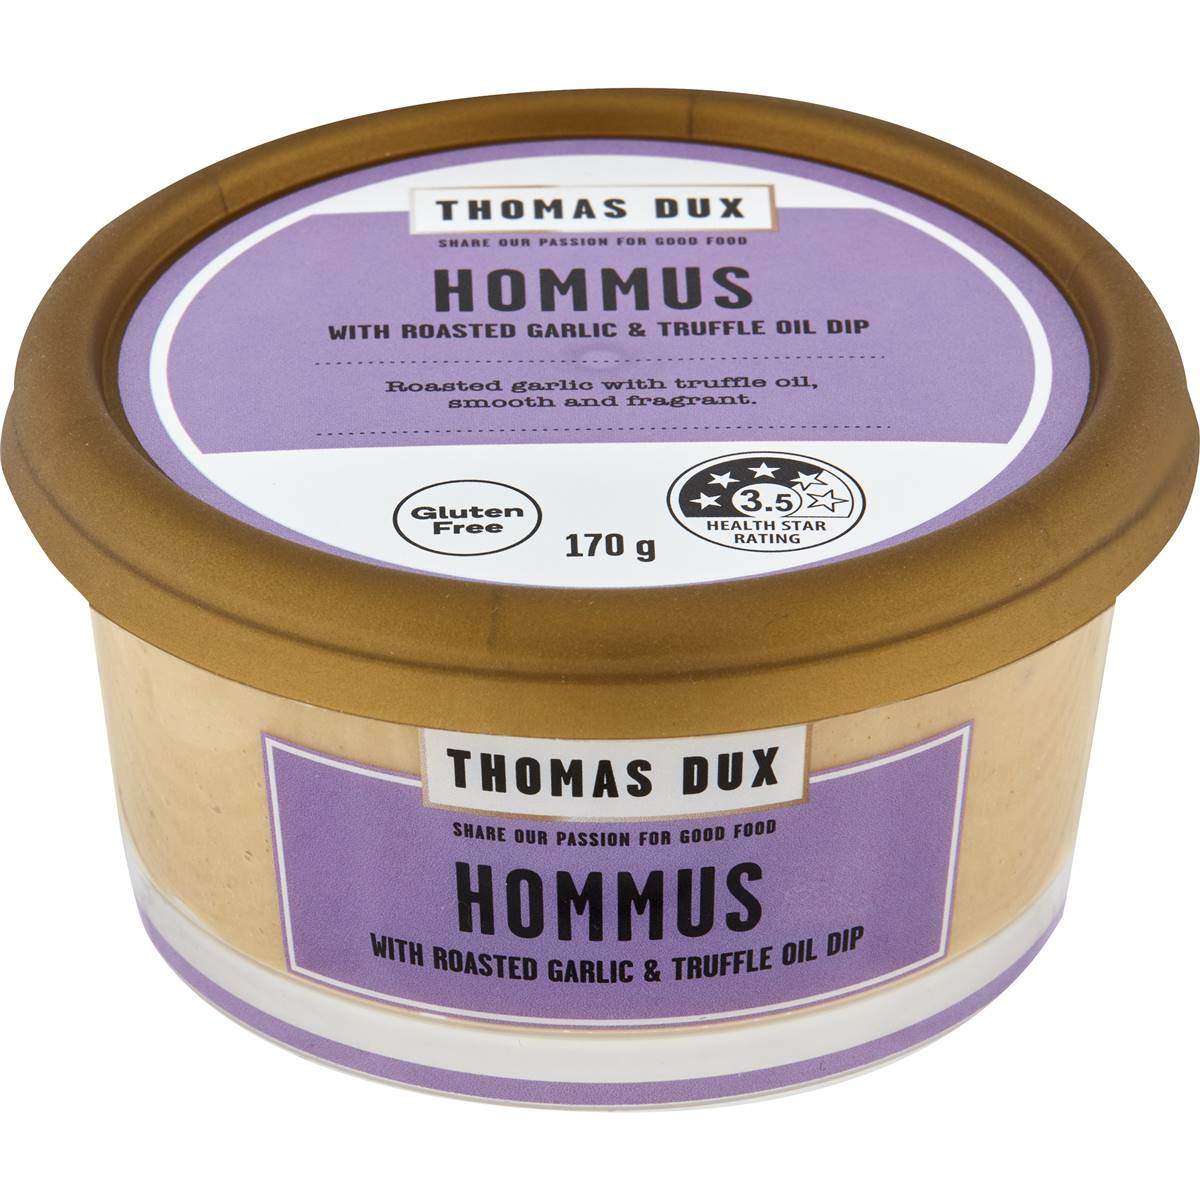 Calories in Thomas Dux Hommus With Roasted Garlic & Truffle Oil Dip